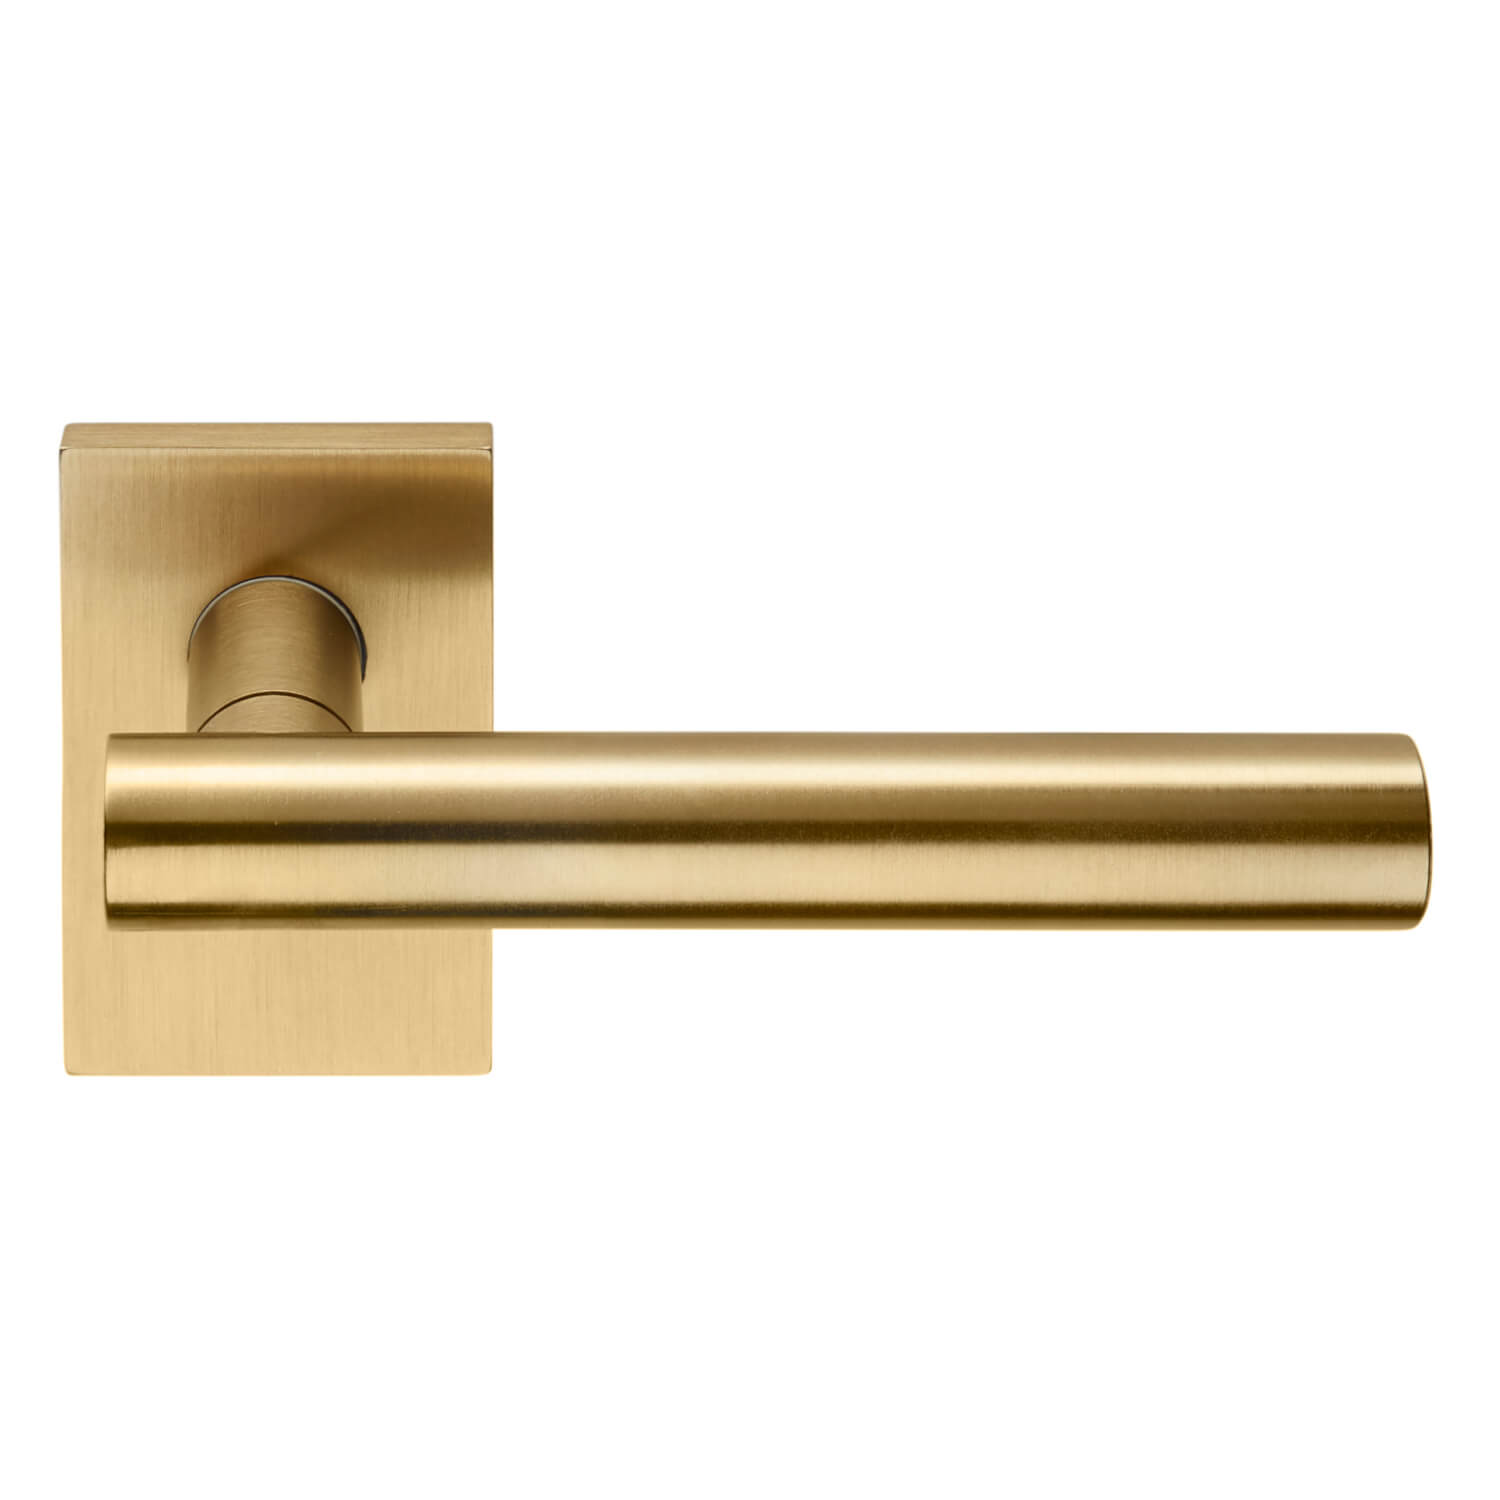 DND Door Handle - Antique satin gold - Design by 967arch - Model BLEND -  DND door handle - Model BLEND - VillaHus